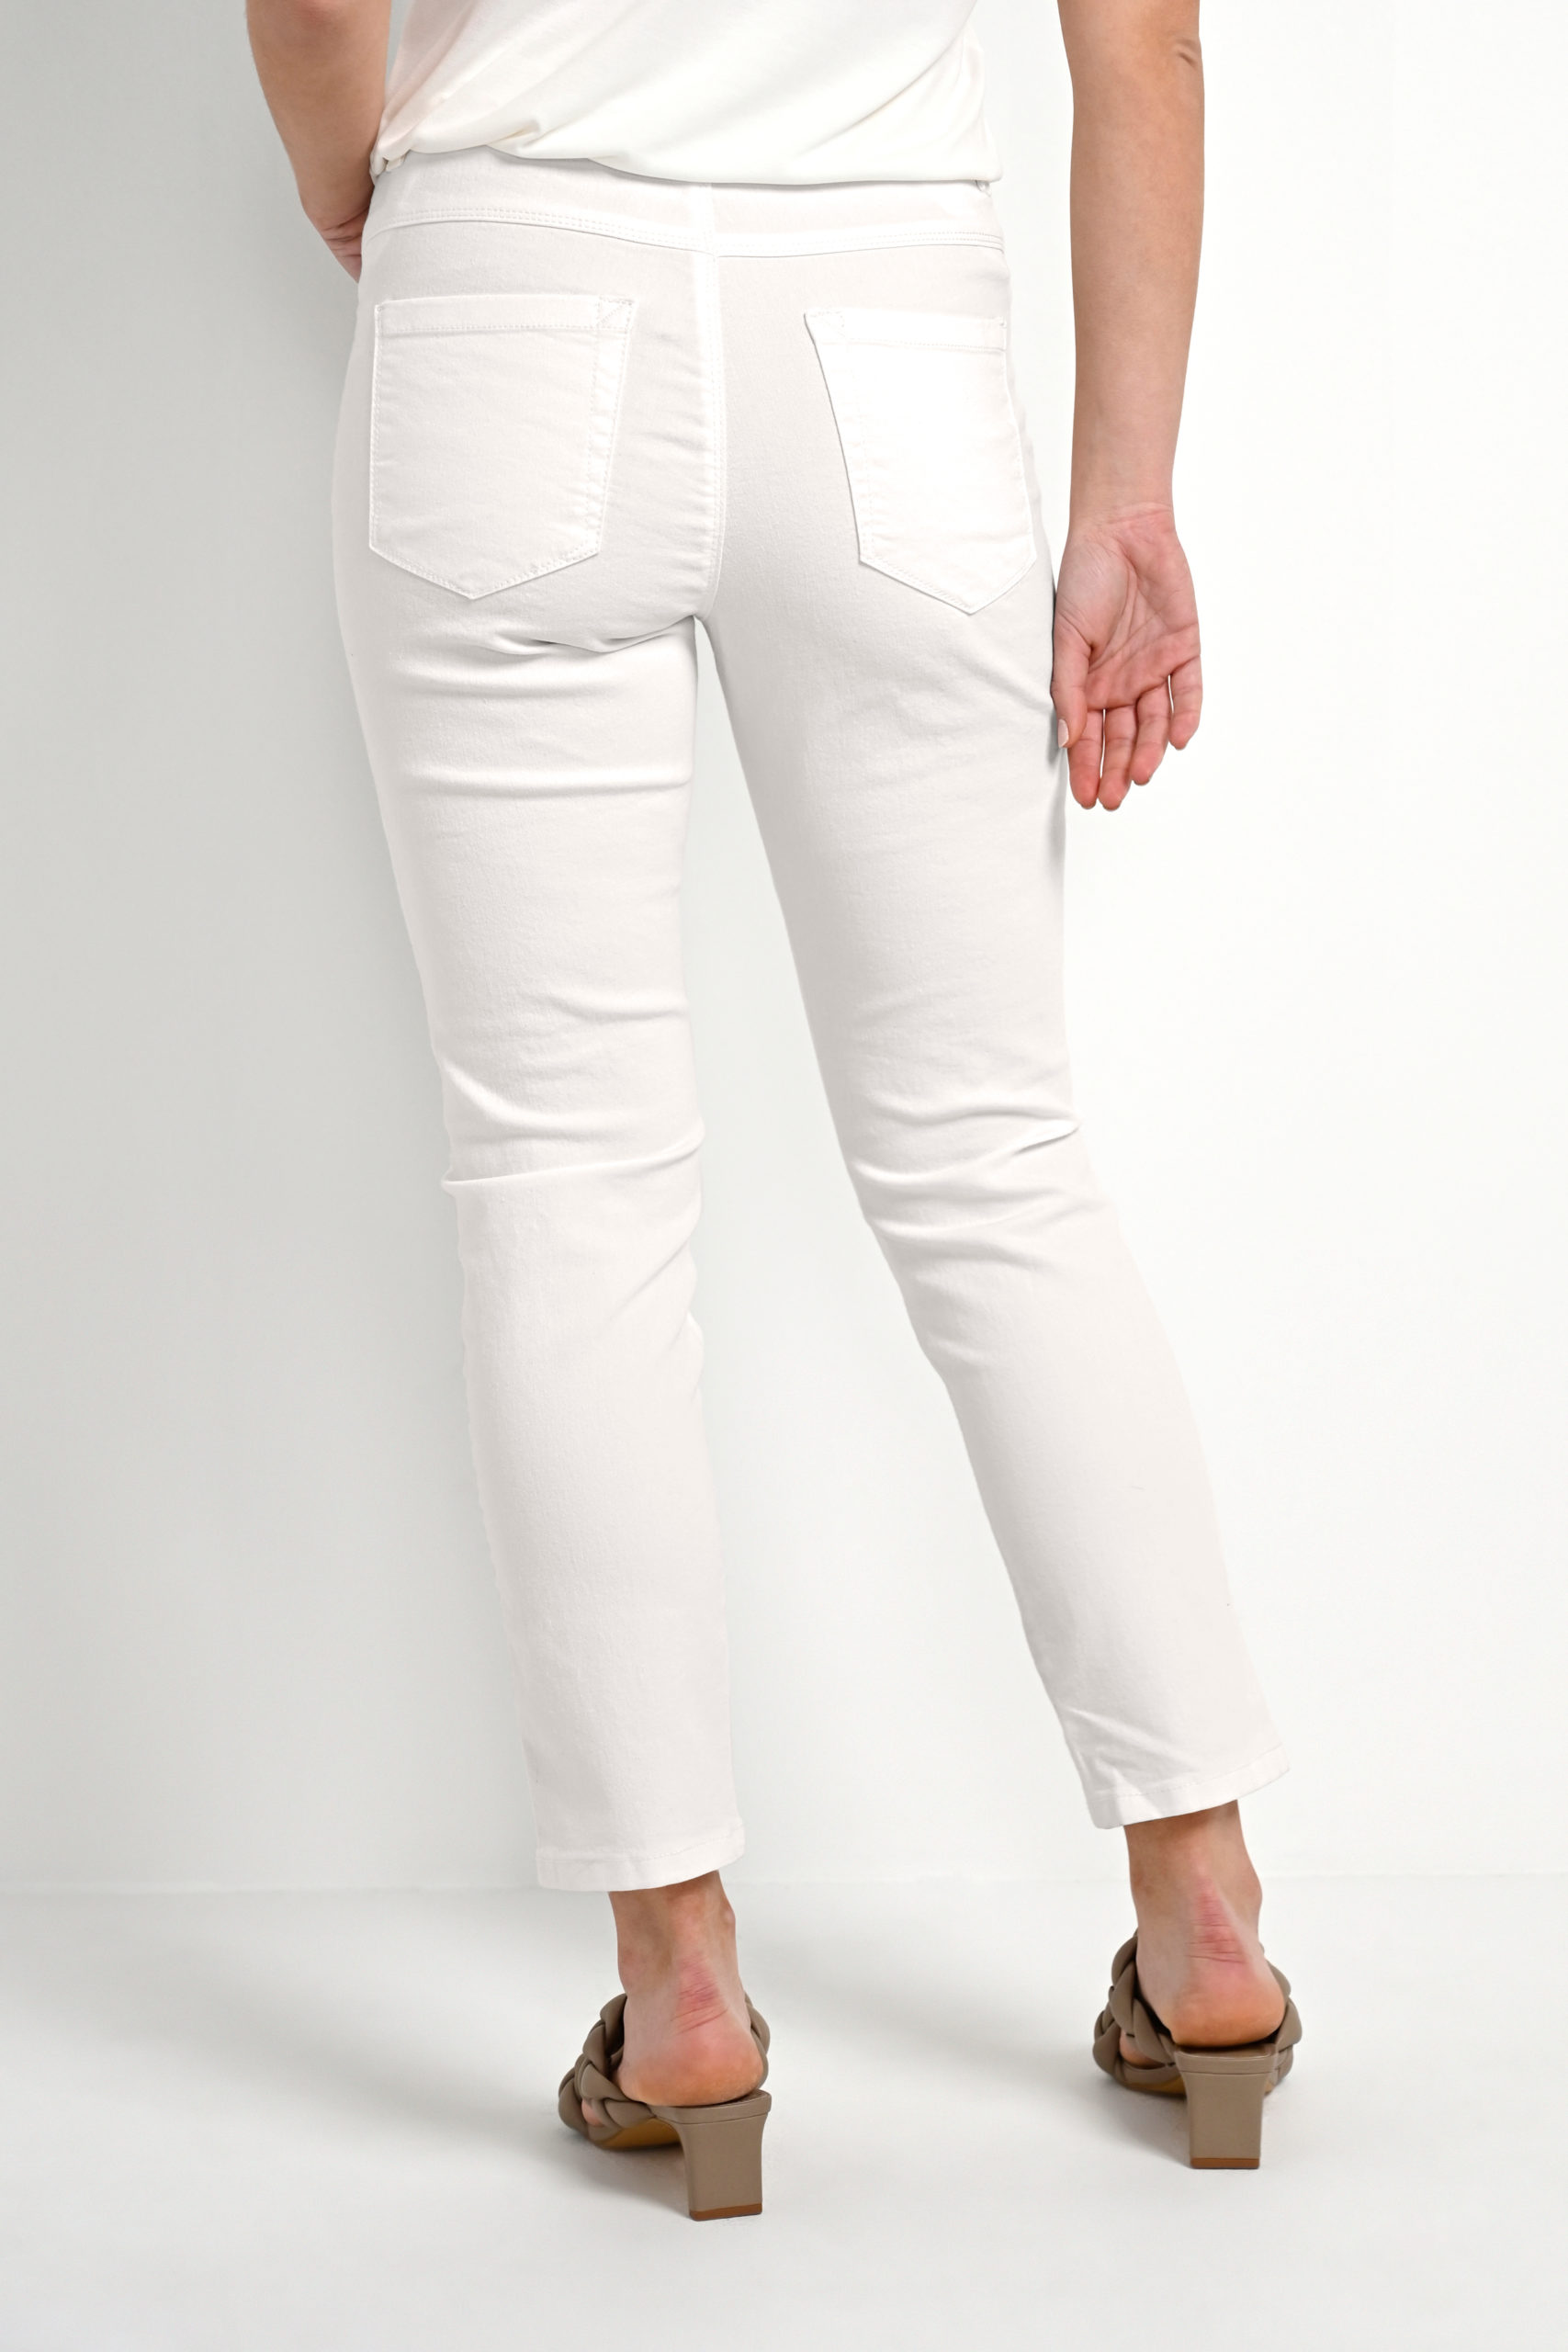 KAzelina Jeans 7/8 white back